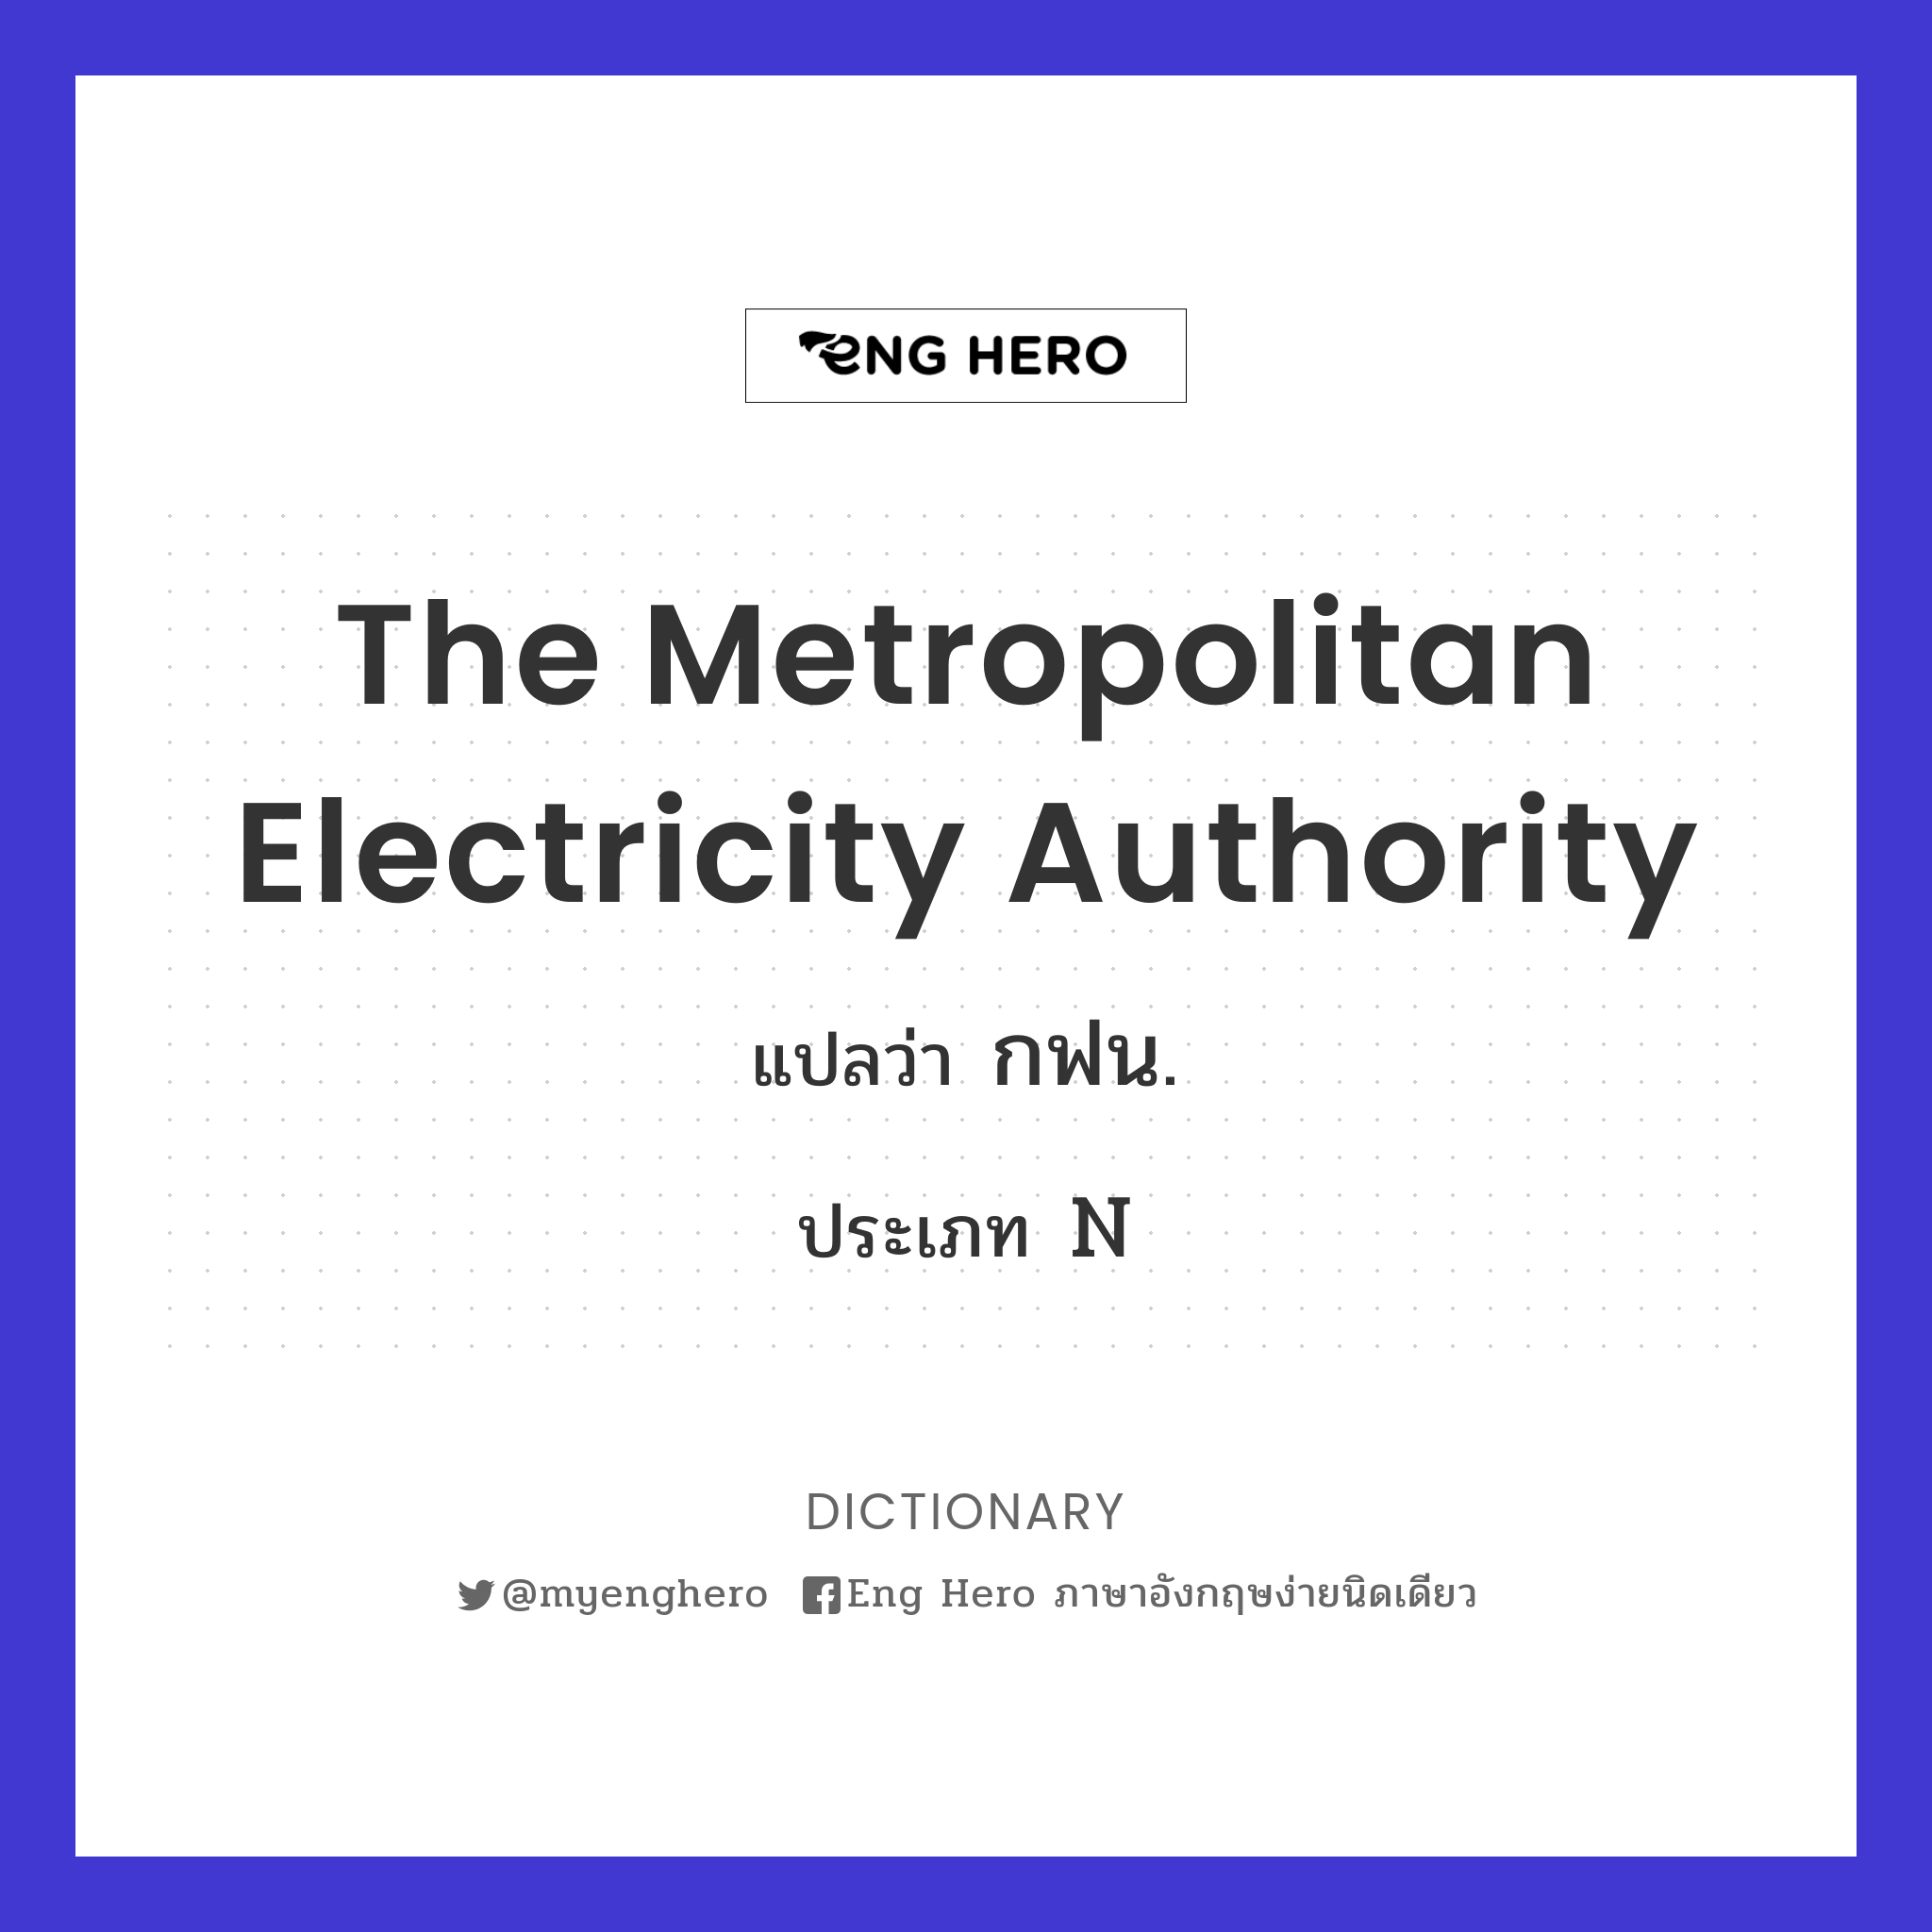 The Metropolitan Electricity Authority